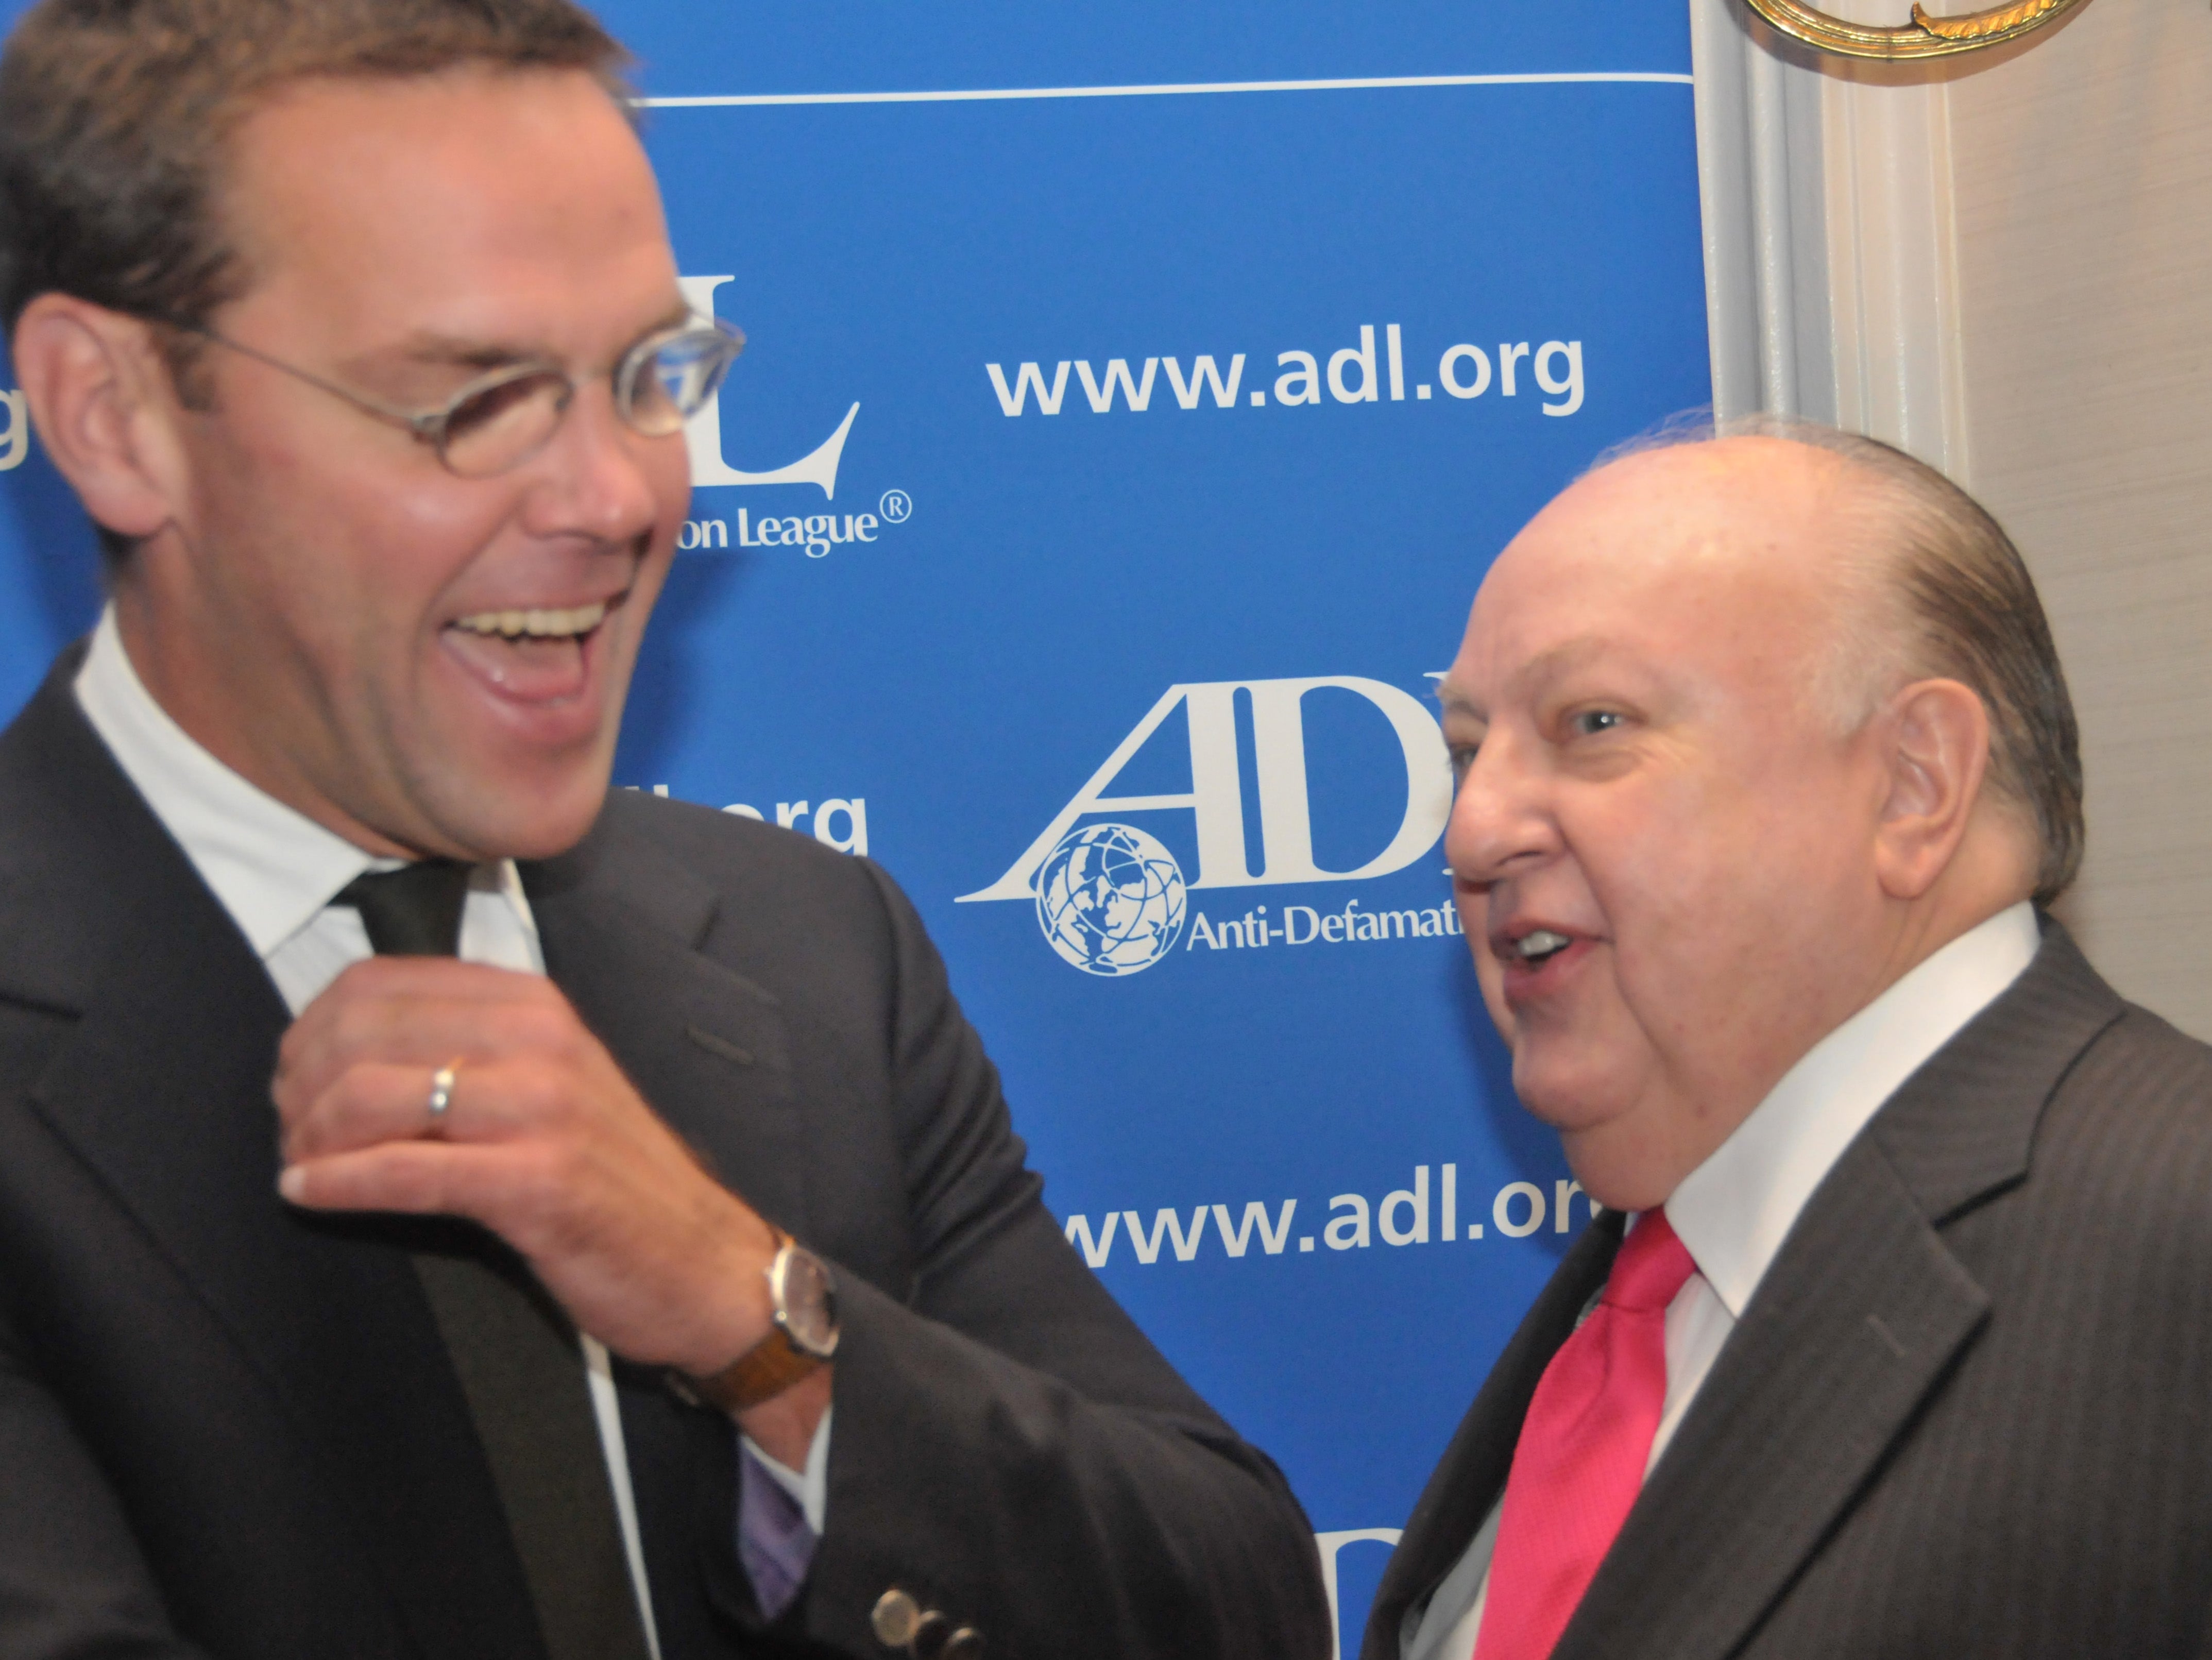 James Murdoch (left) and Roger Ailes attend an Anti-Defamation dinner that honoured Rupert Murdoch in 2010